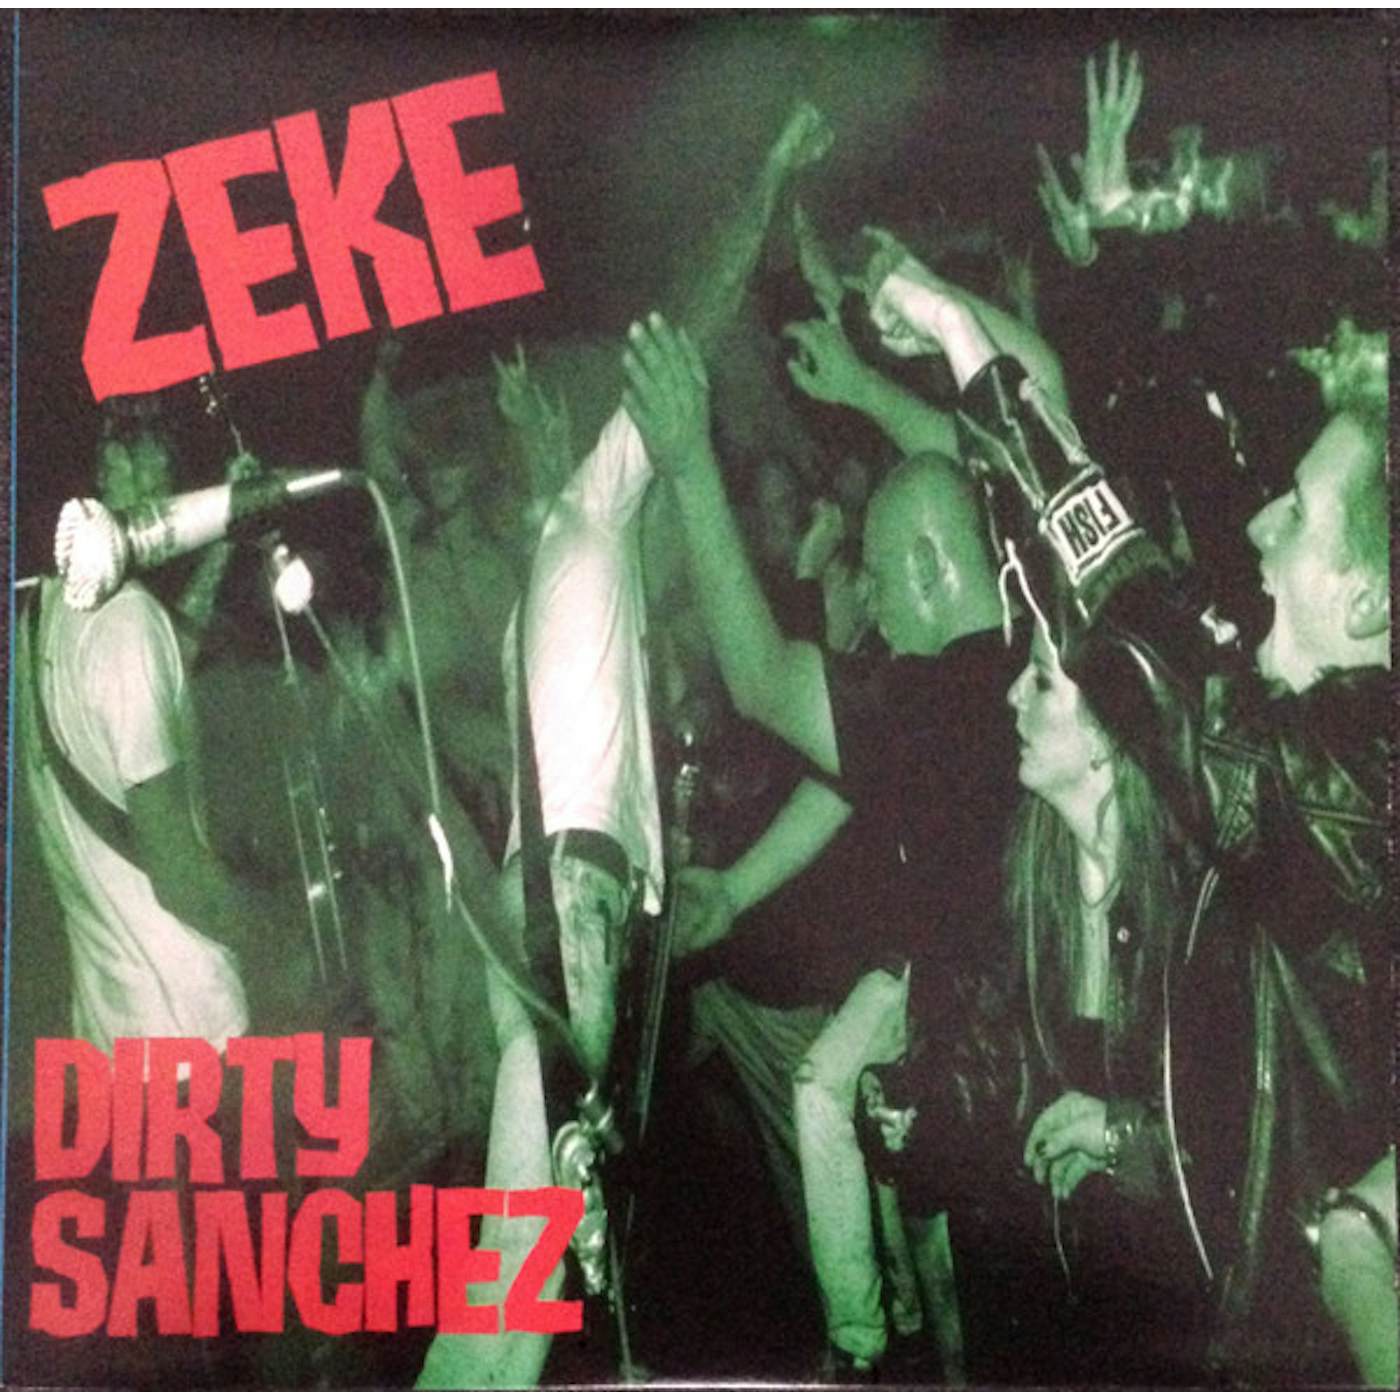 Zeke DIRTY SANCHEZ CD